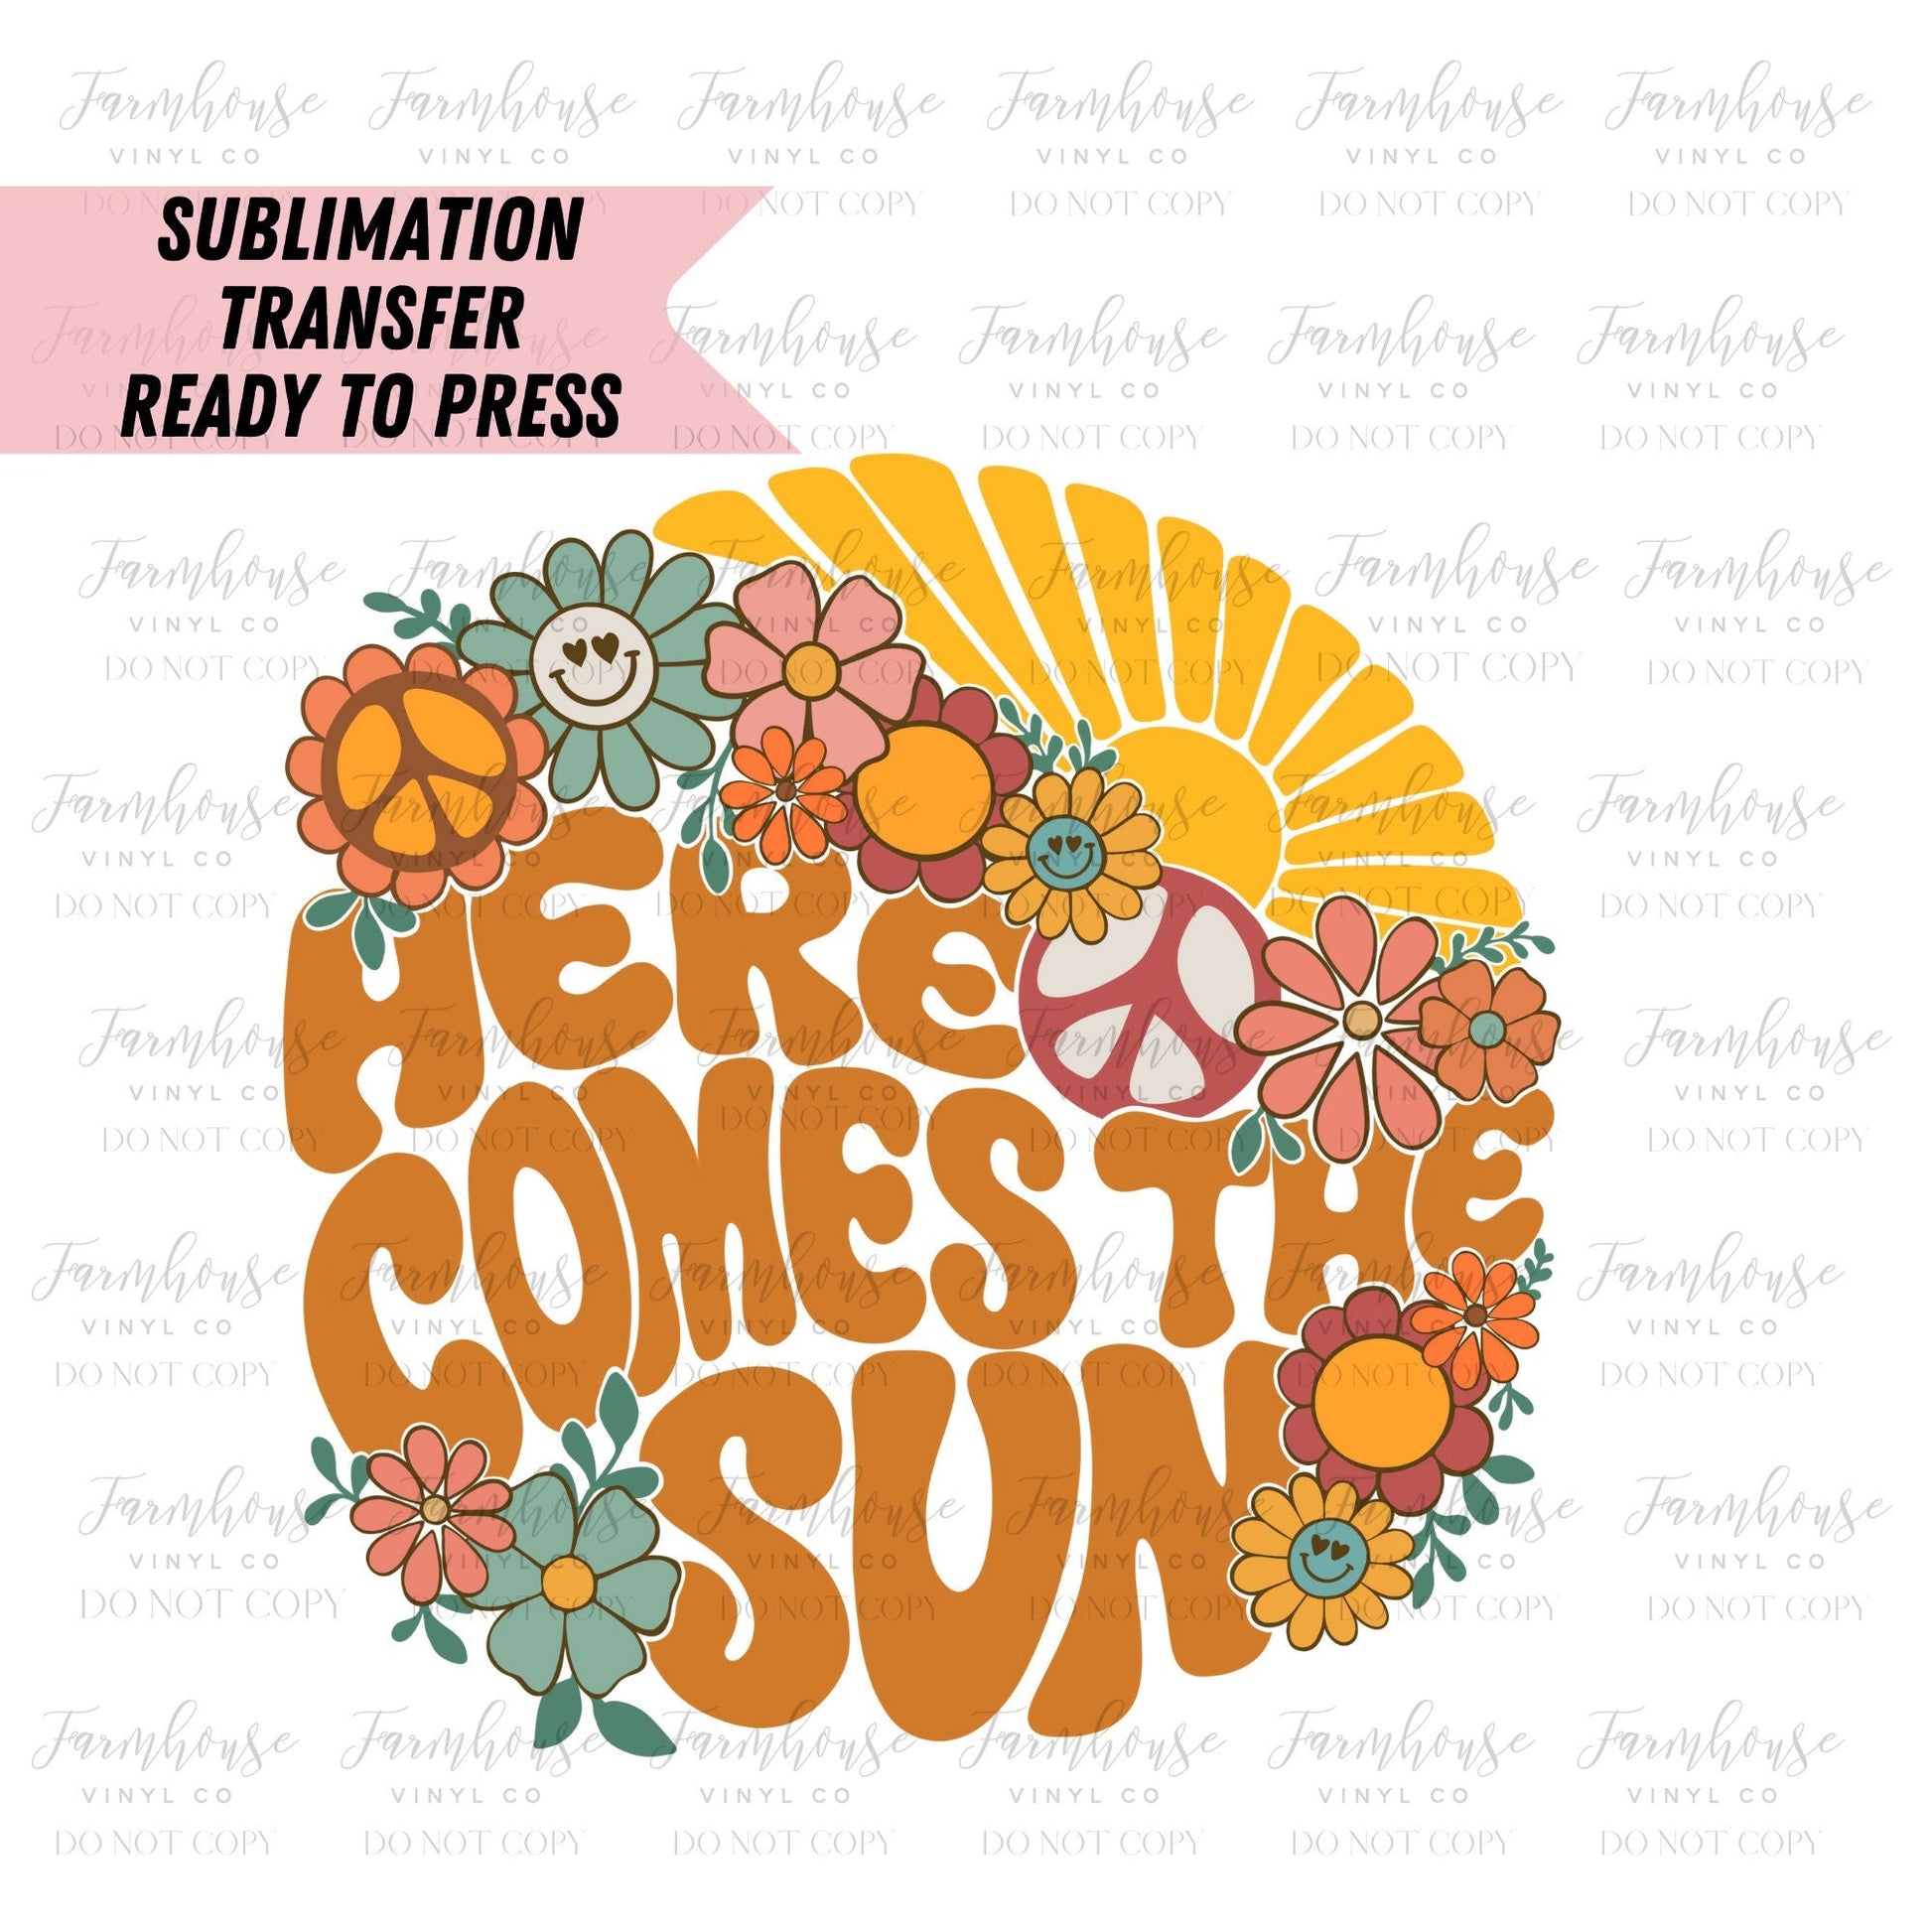 Here Comes The Sun Retro  Ready to Press Sublimation Transfer - Farmhouse Vinyl Co